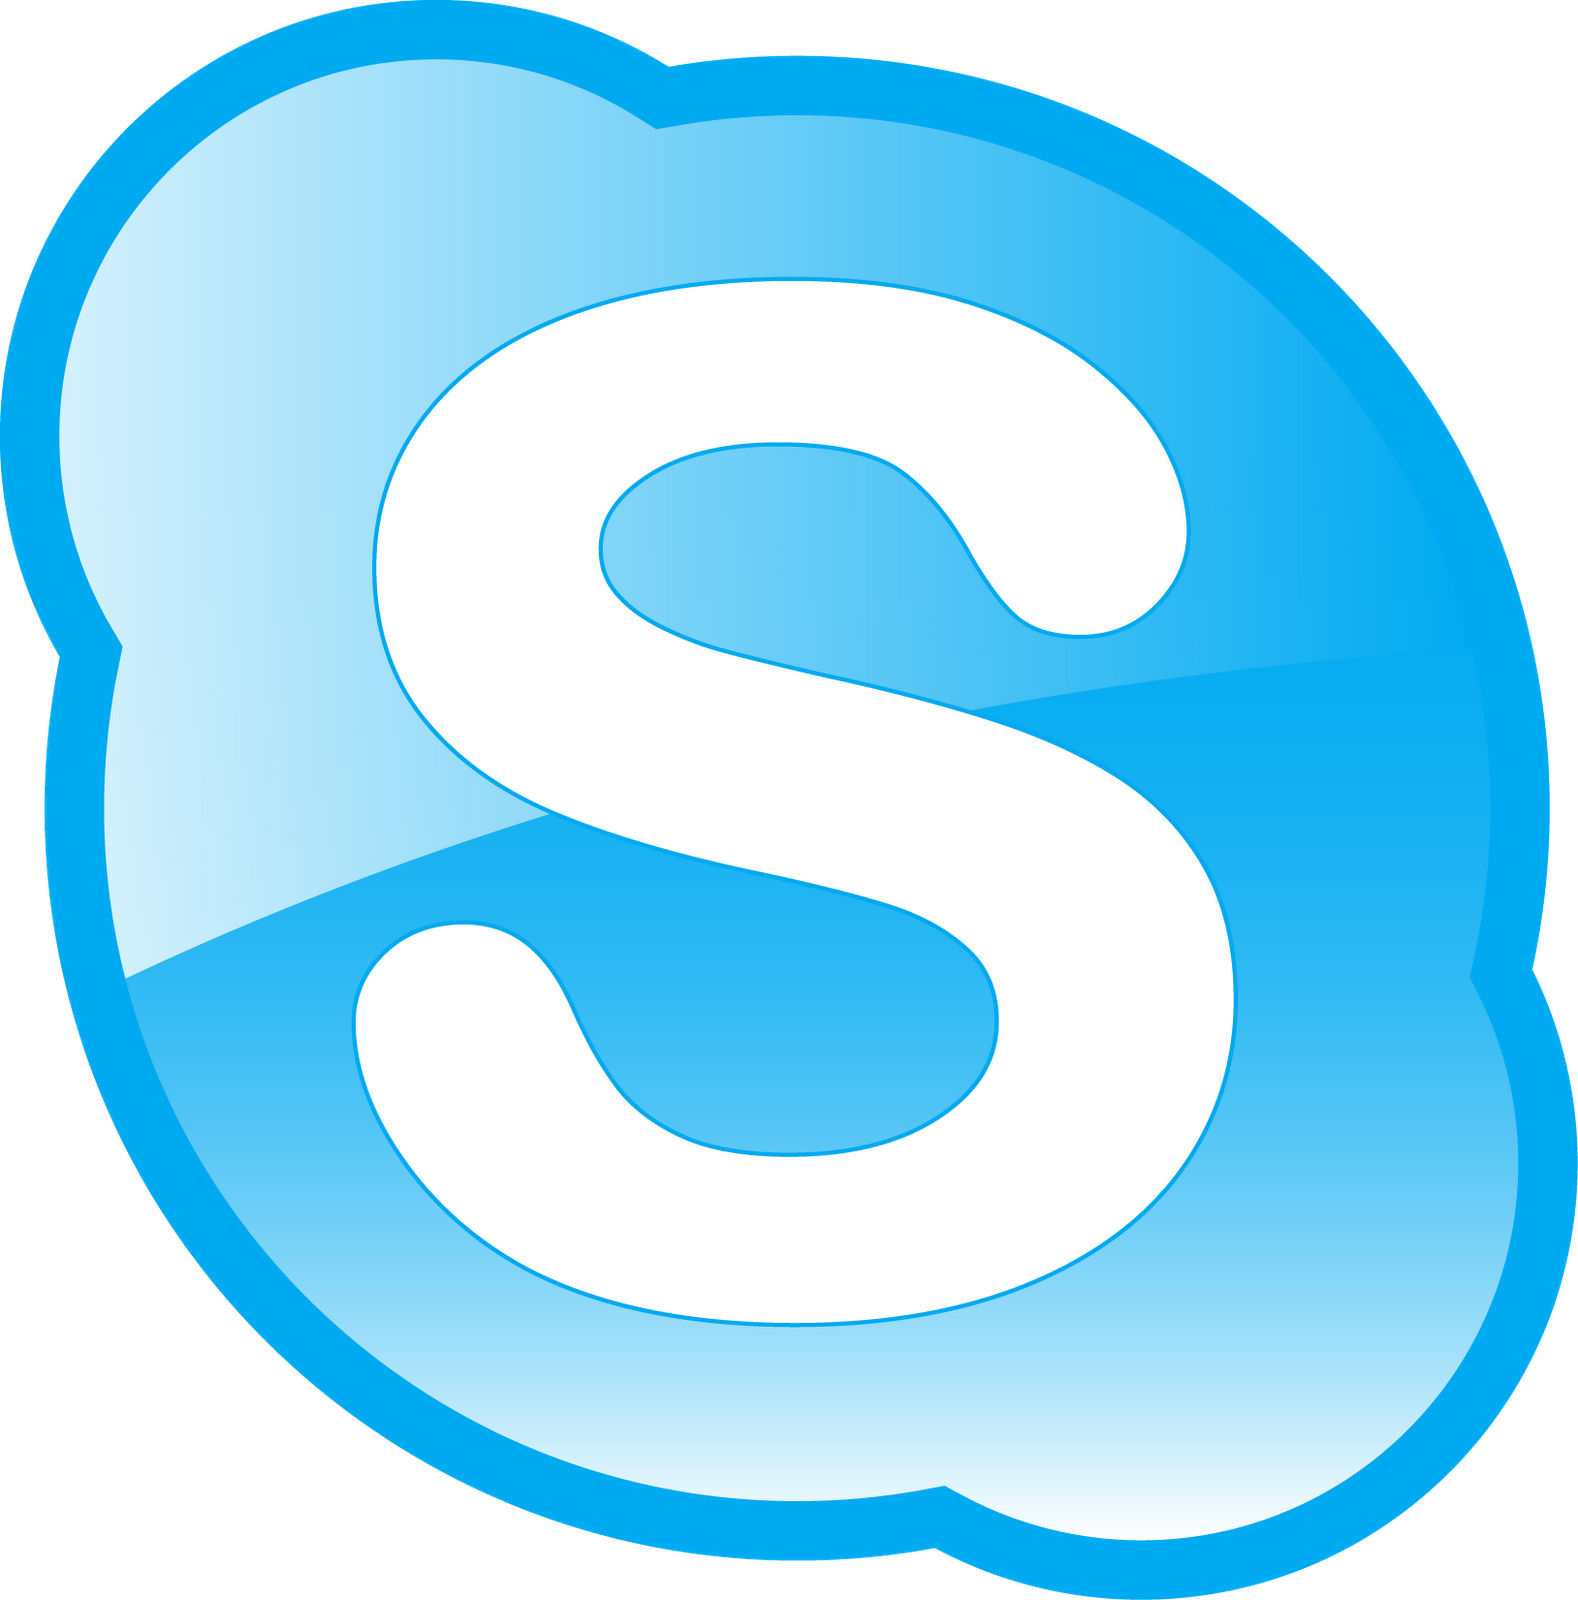 skype logo.